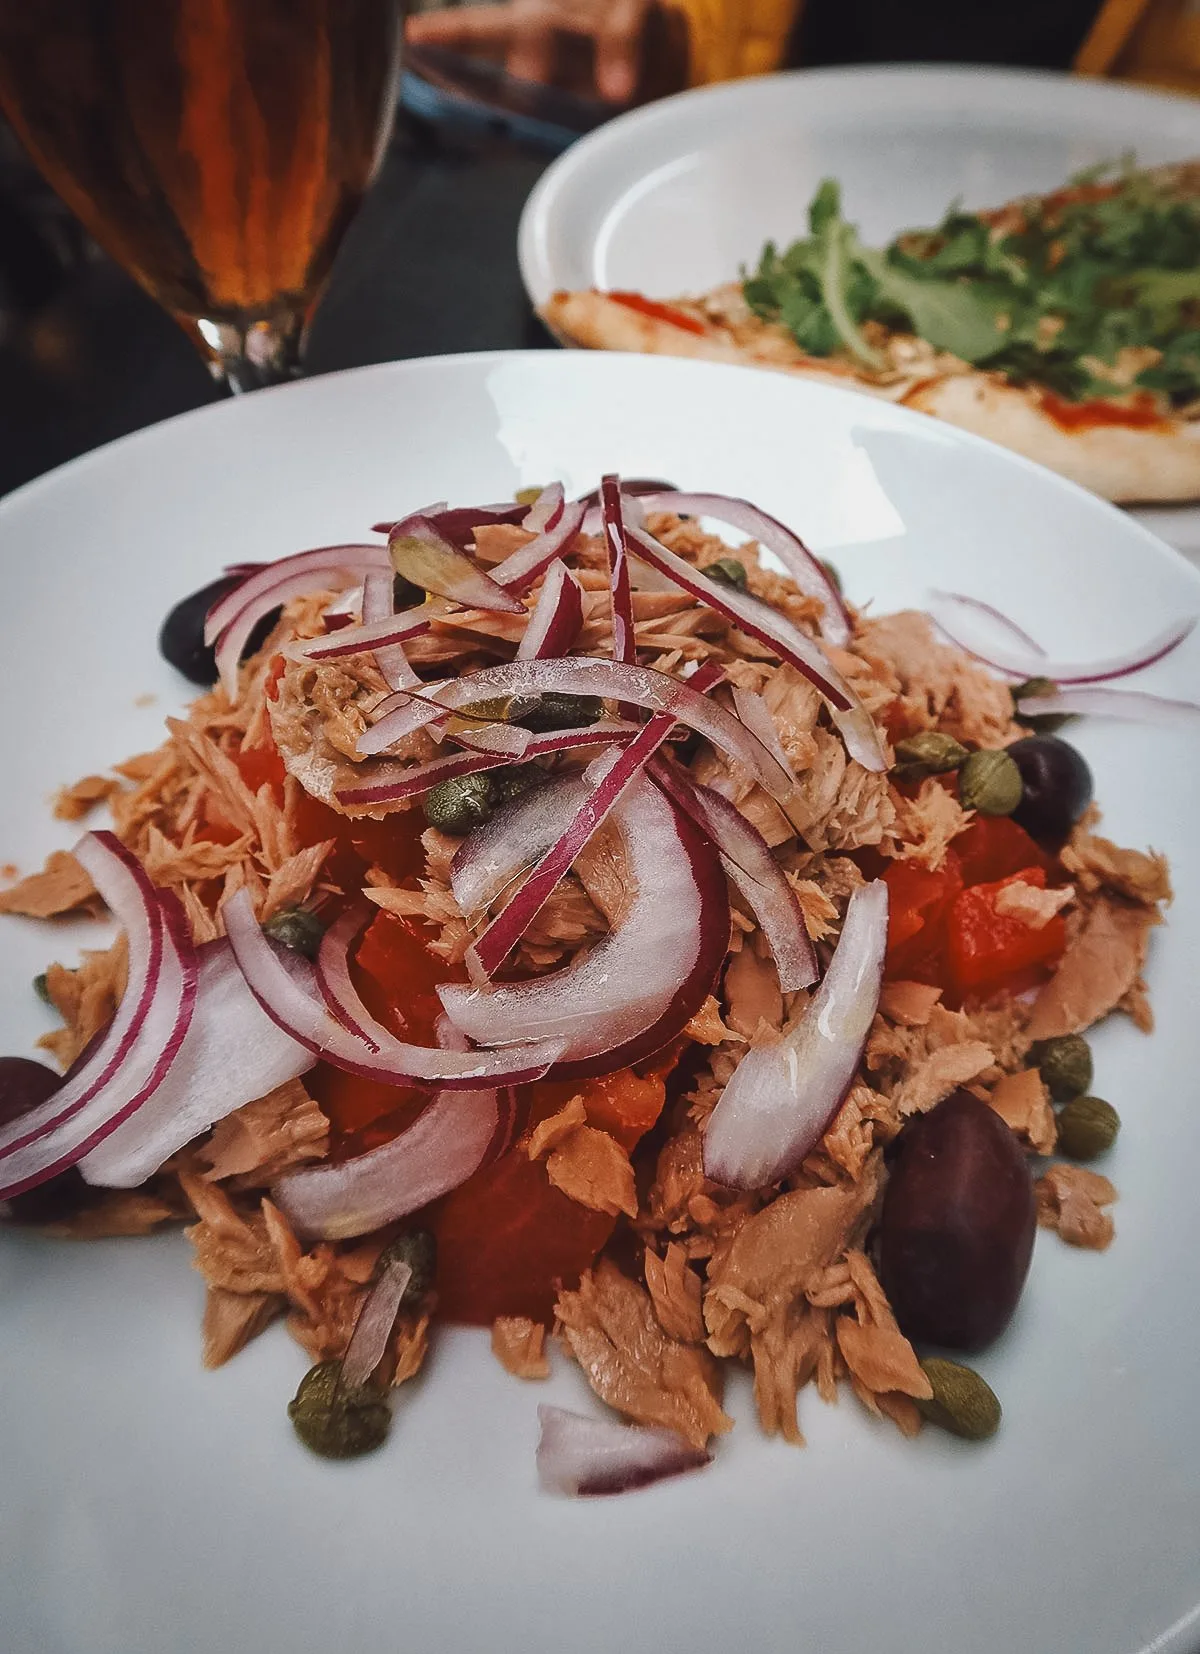 Tuna salad at a restaurant in Dubrovnik